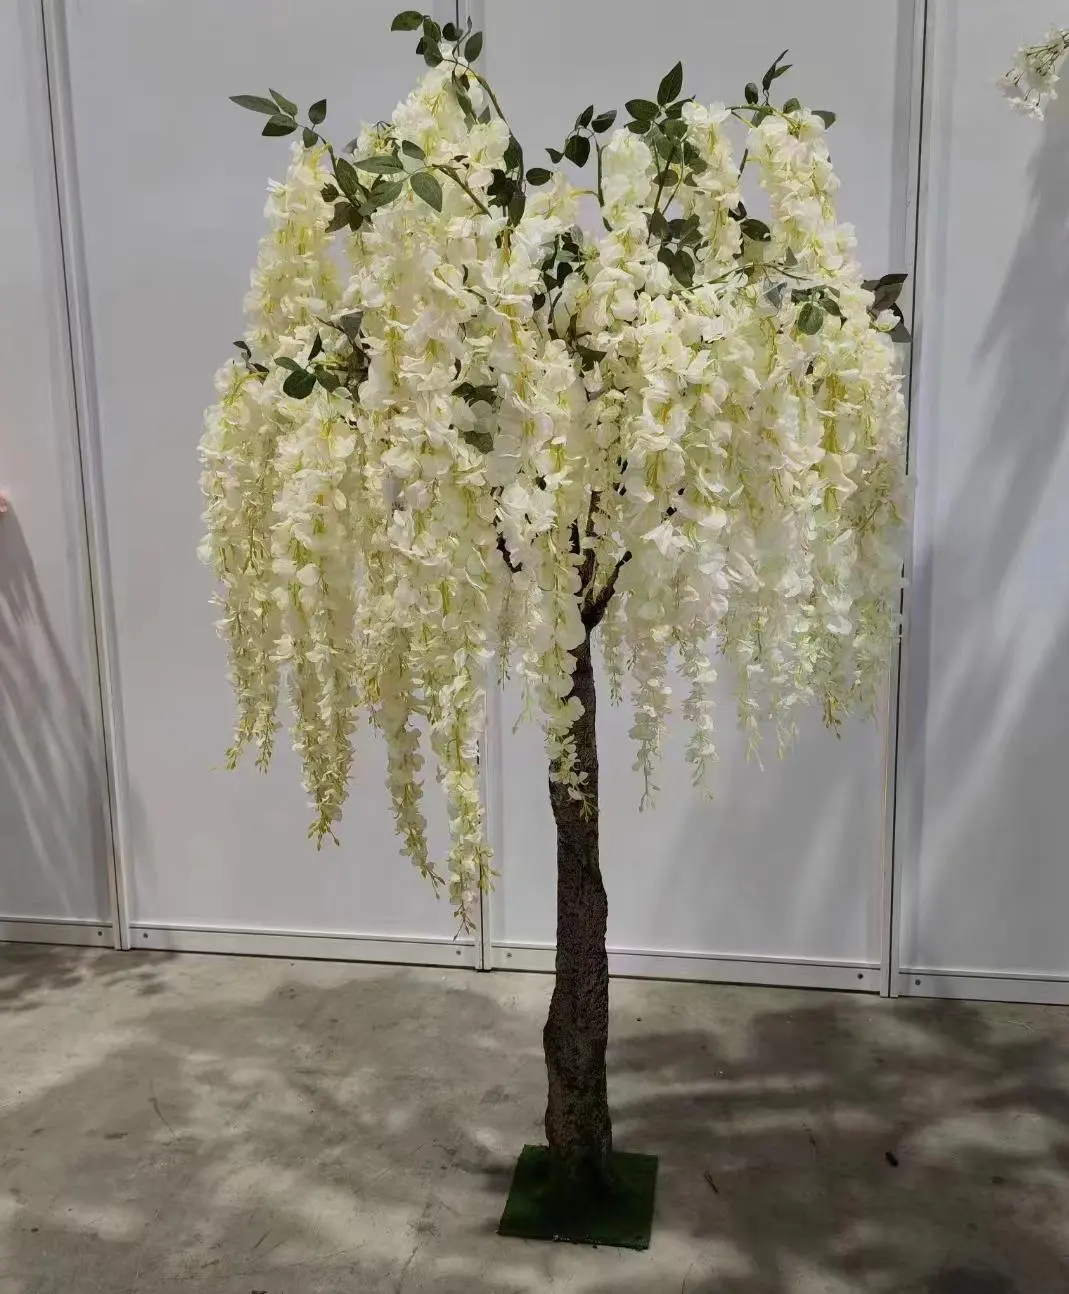 Wholesale Artificial Cherry Wedding Flower Sakura Flower Cherry Blossom Tree For Wedding Centerpieces Decorations